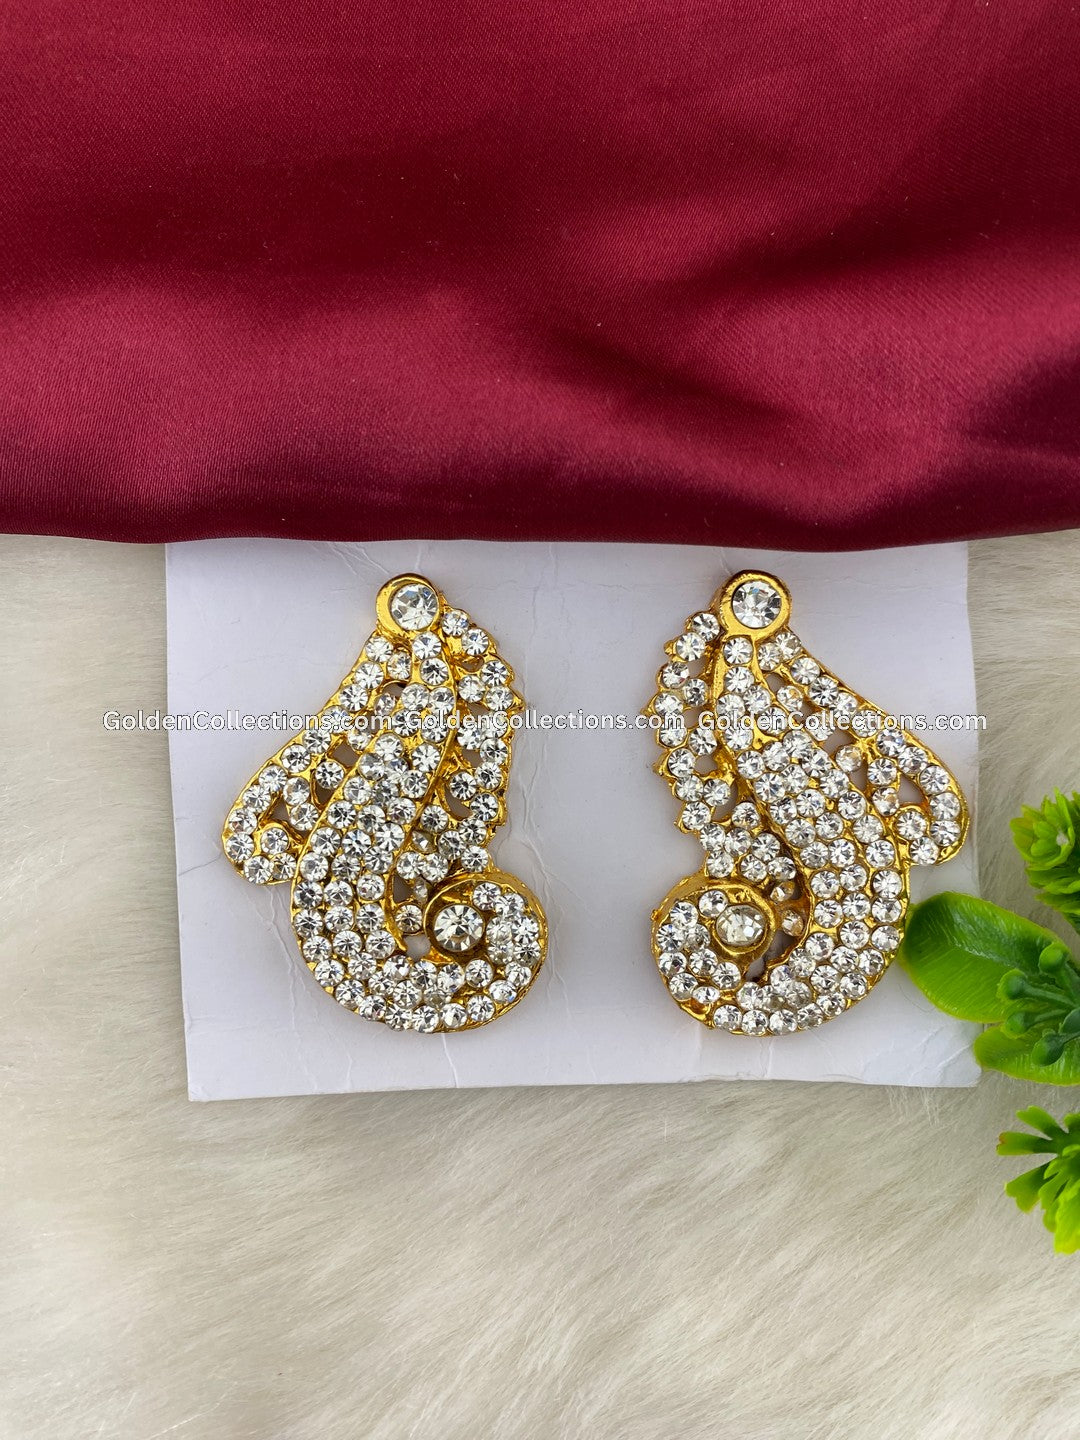 Deity Earrings - Ornate Adornments for Devotees - DGE-149